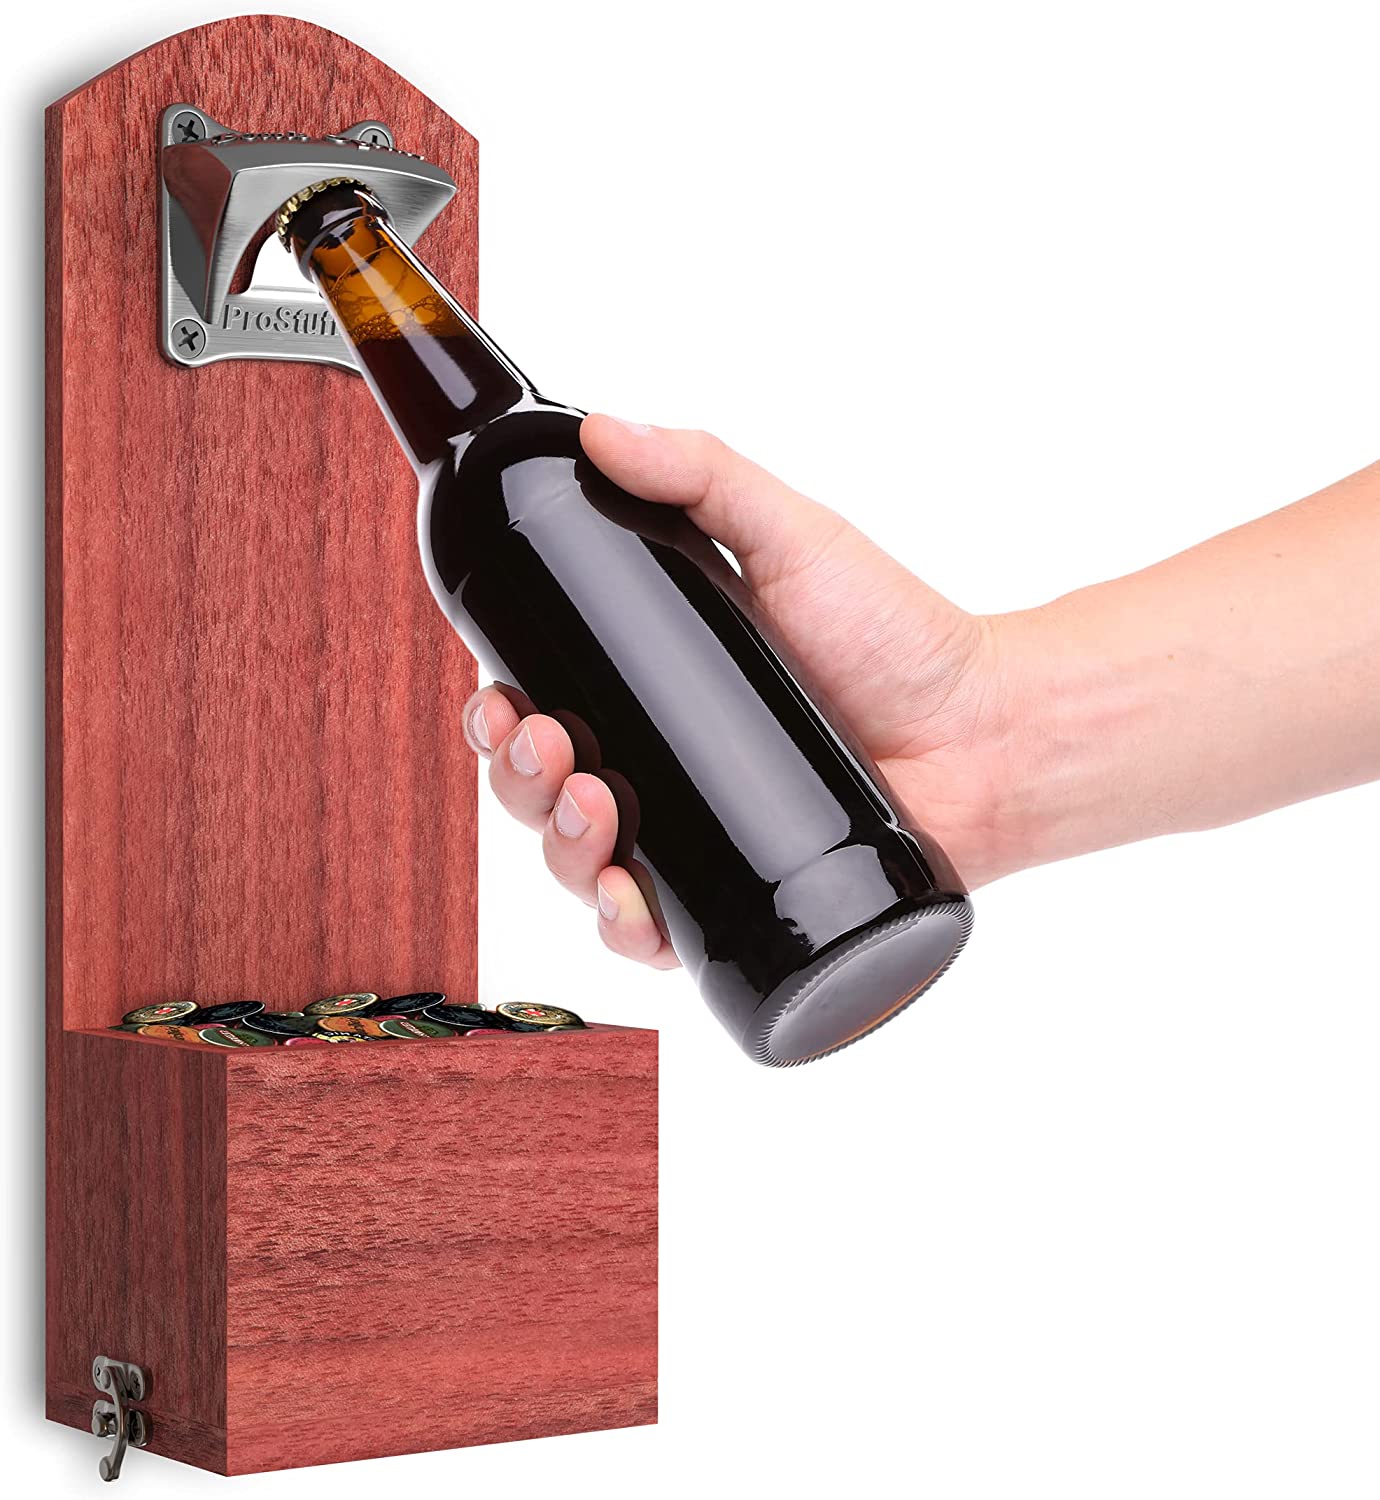 ProStuff Wall Mount Bottle Opener with Cap Catcher